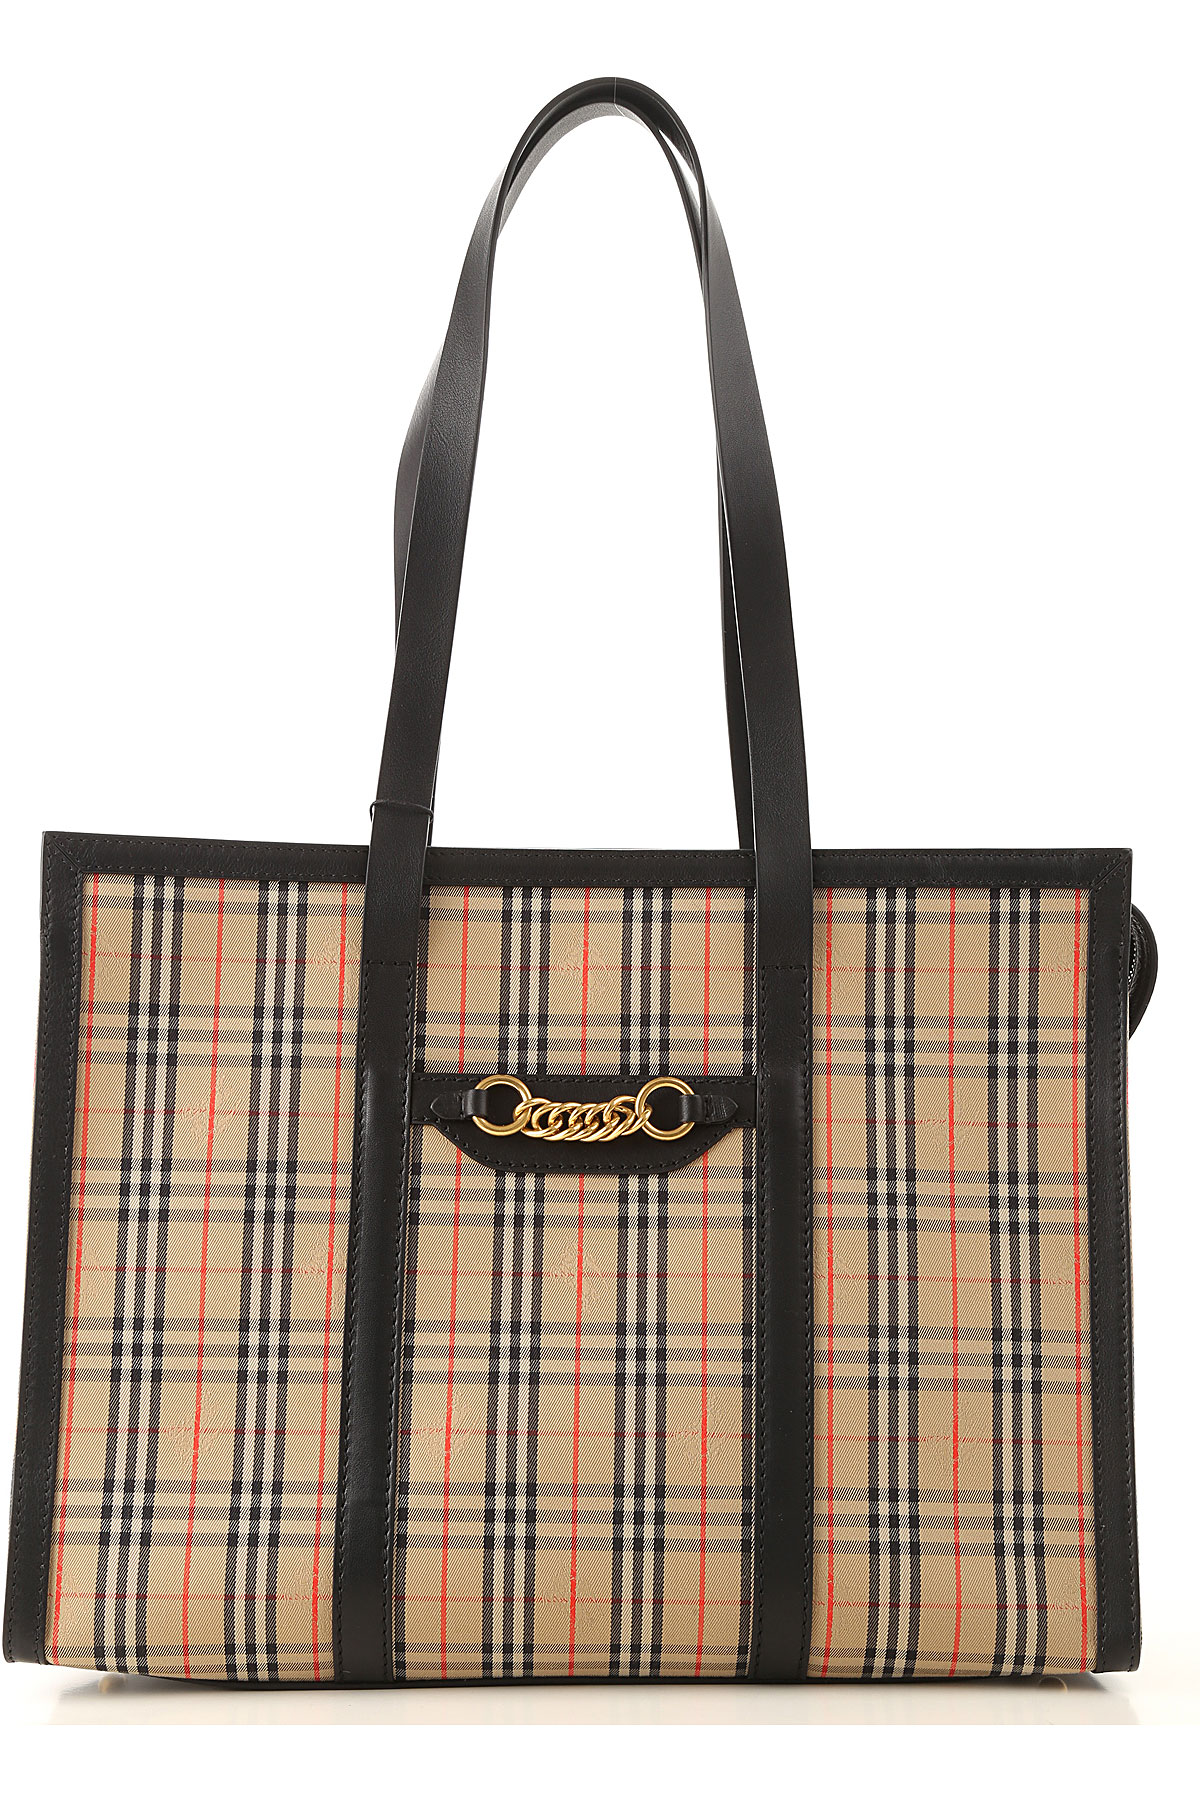 Handbags Burberry, Style code: 8006411-a1189-linkziptote